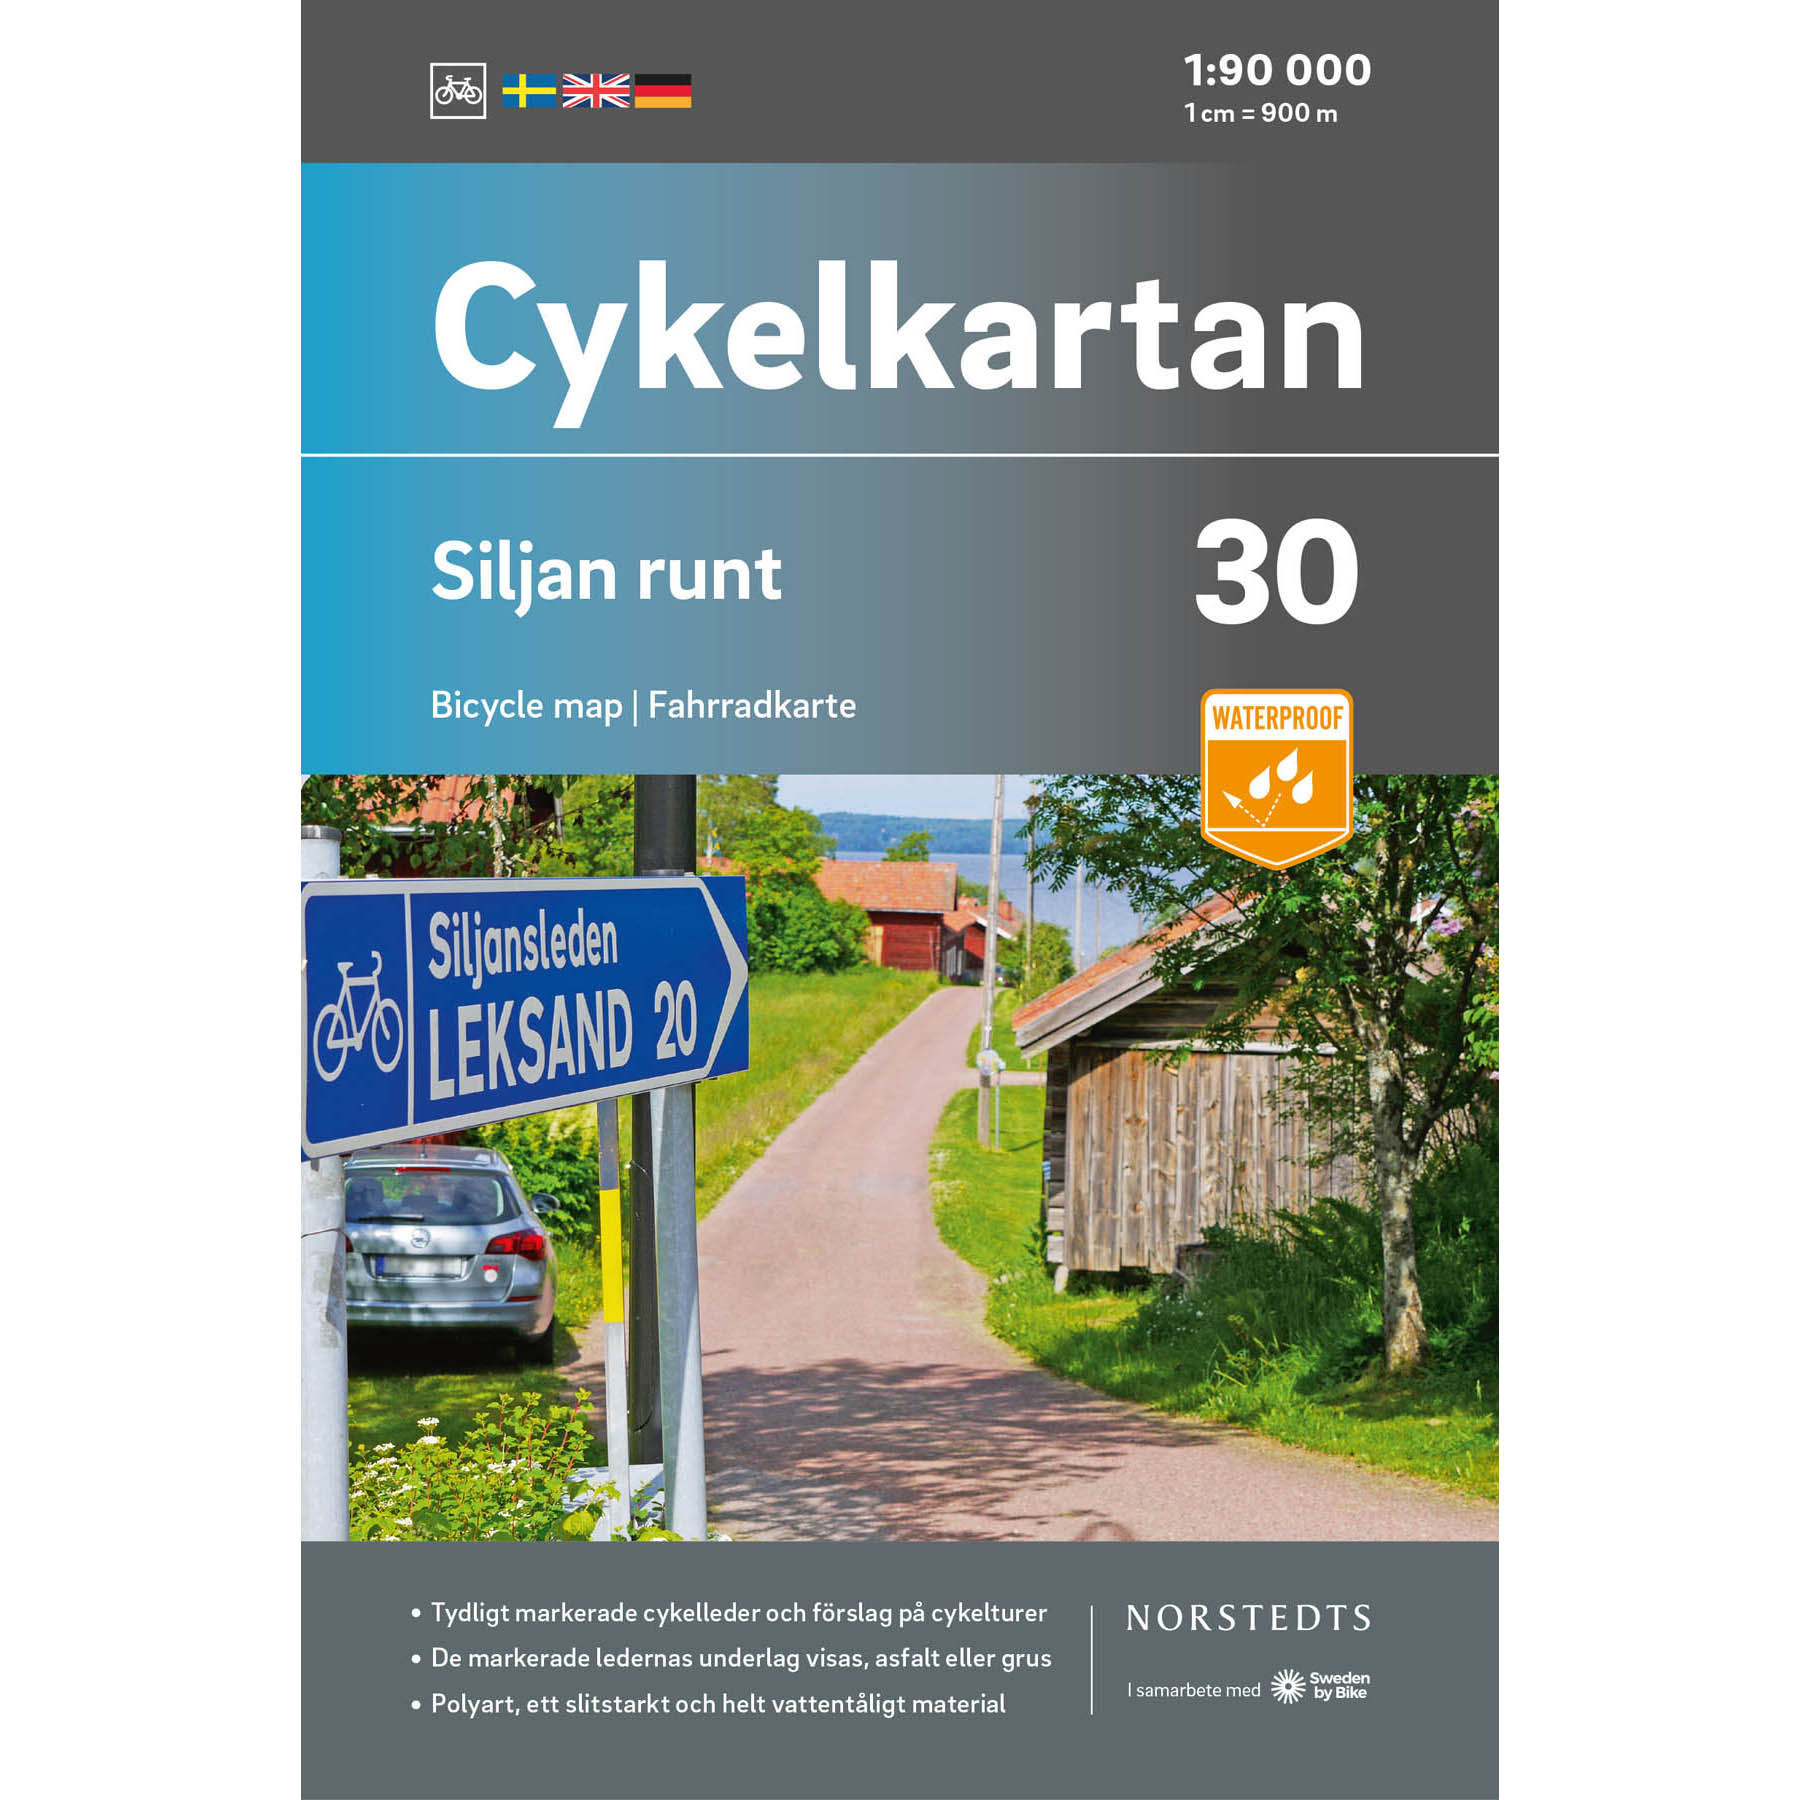 Cykelkarta Siljan Runt - Dalarna - Mora - Borlänge - Sweden by Bike